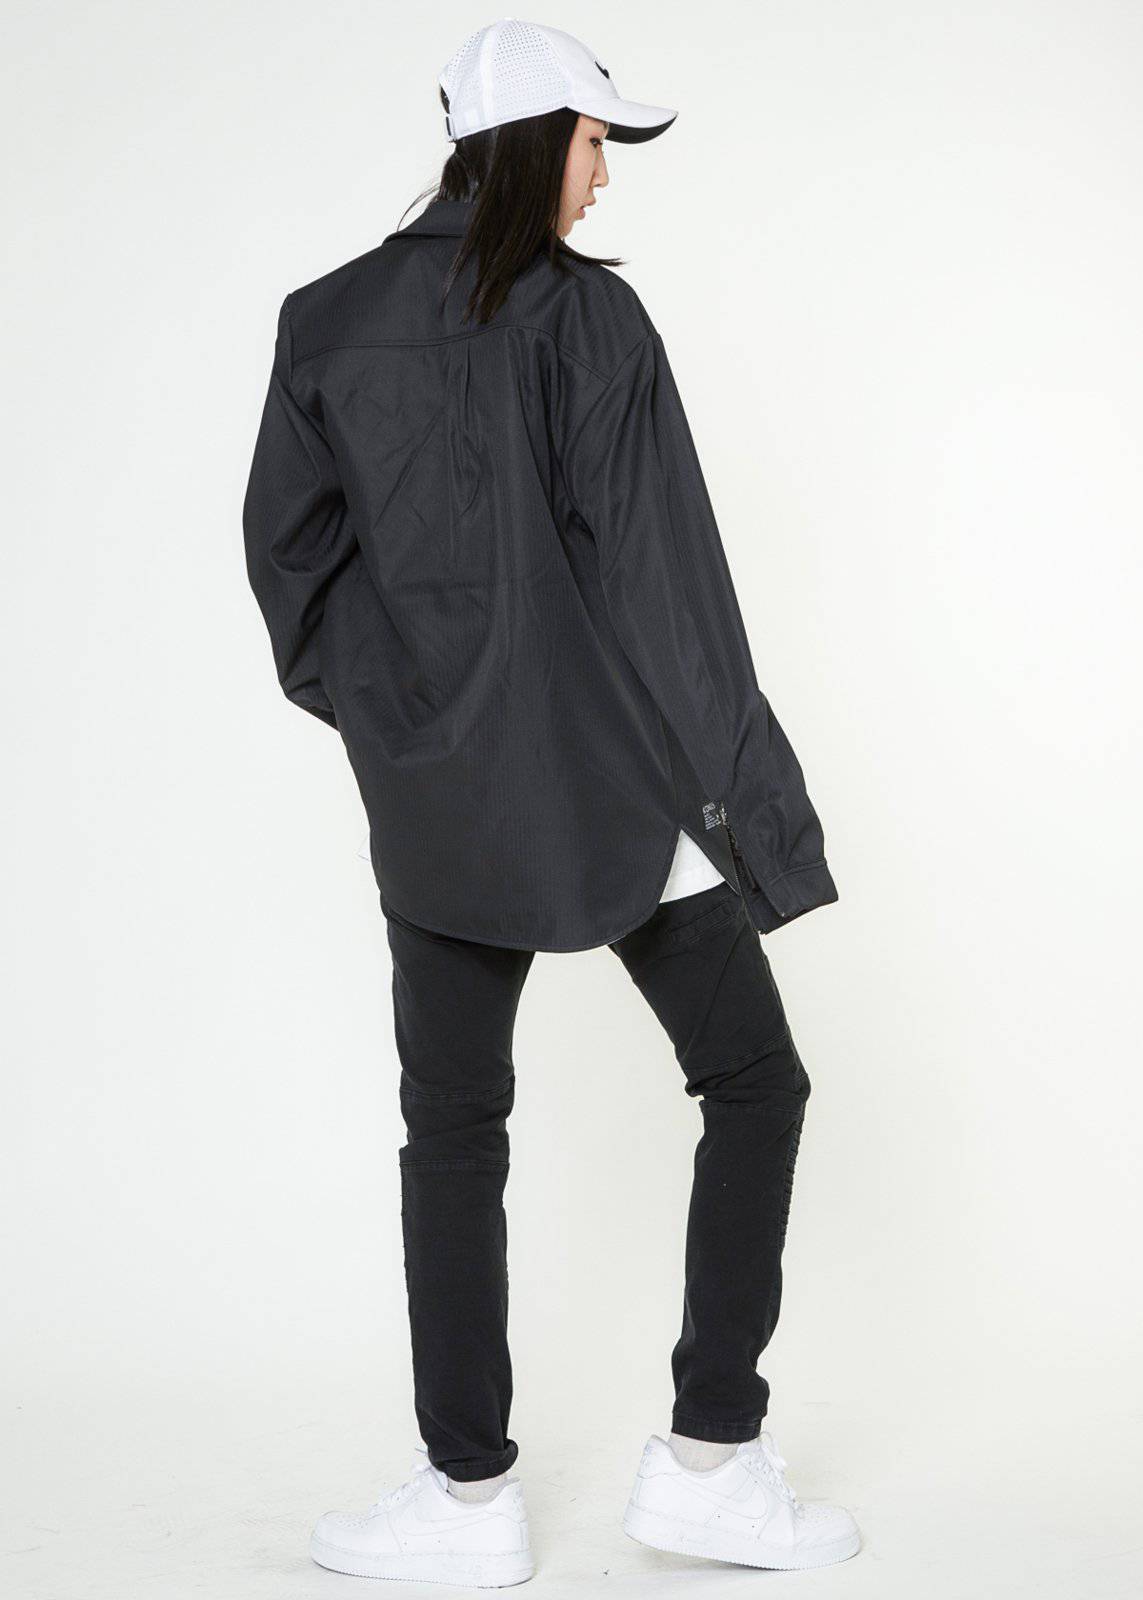 Konus Men's Reversible Shirt Jacket  in Black by Shop at Konus